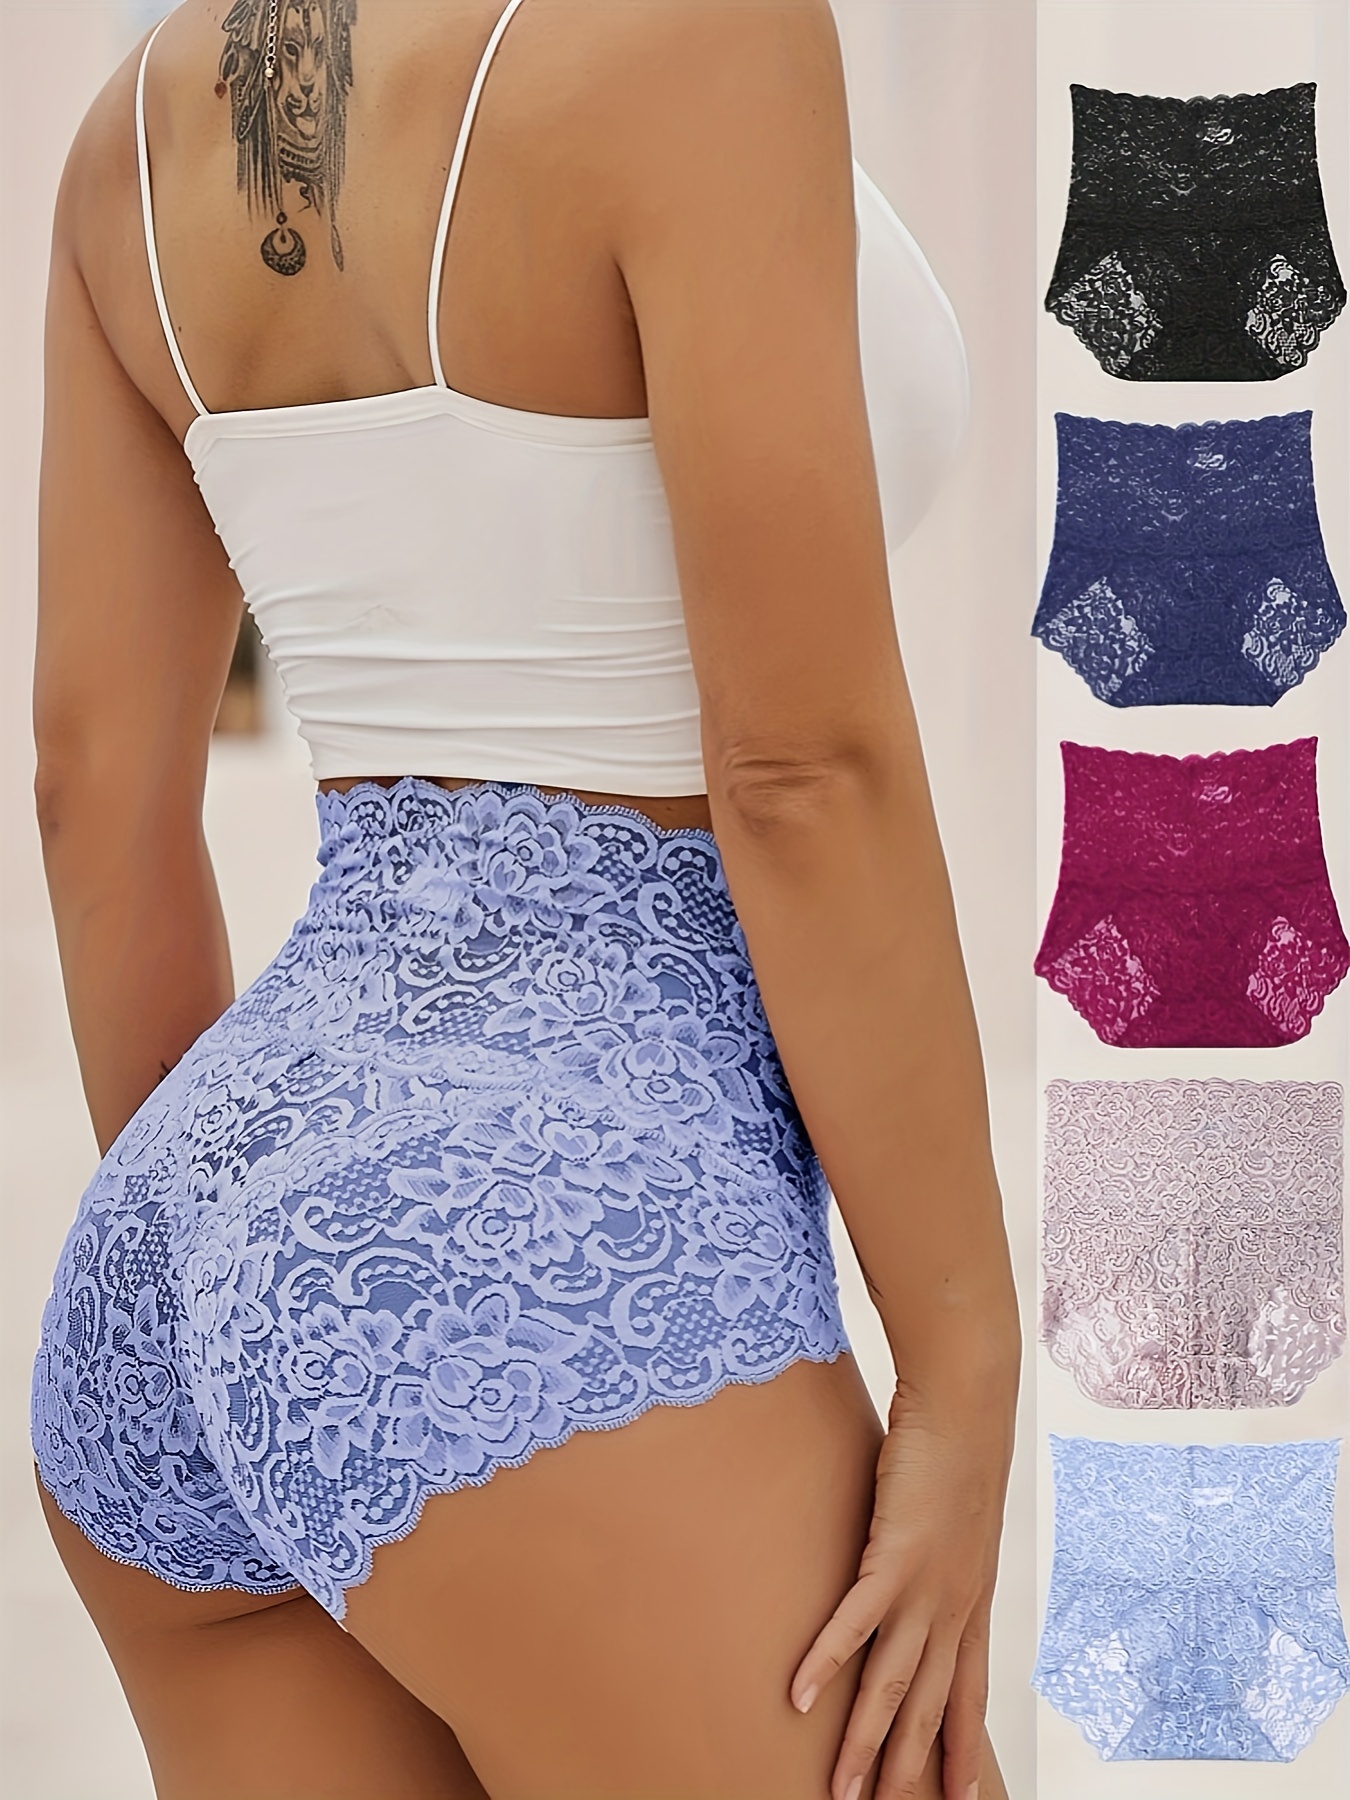 Female Waist Trainer Slimming Underwear Briefs Flower Print Seamless Nylon  Stretchy Tummy Control Panties for Women Daily Wear - AliExpress